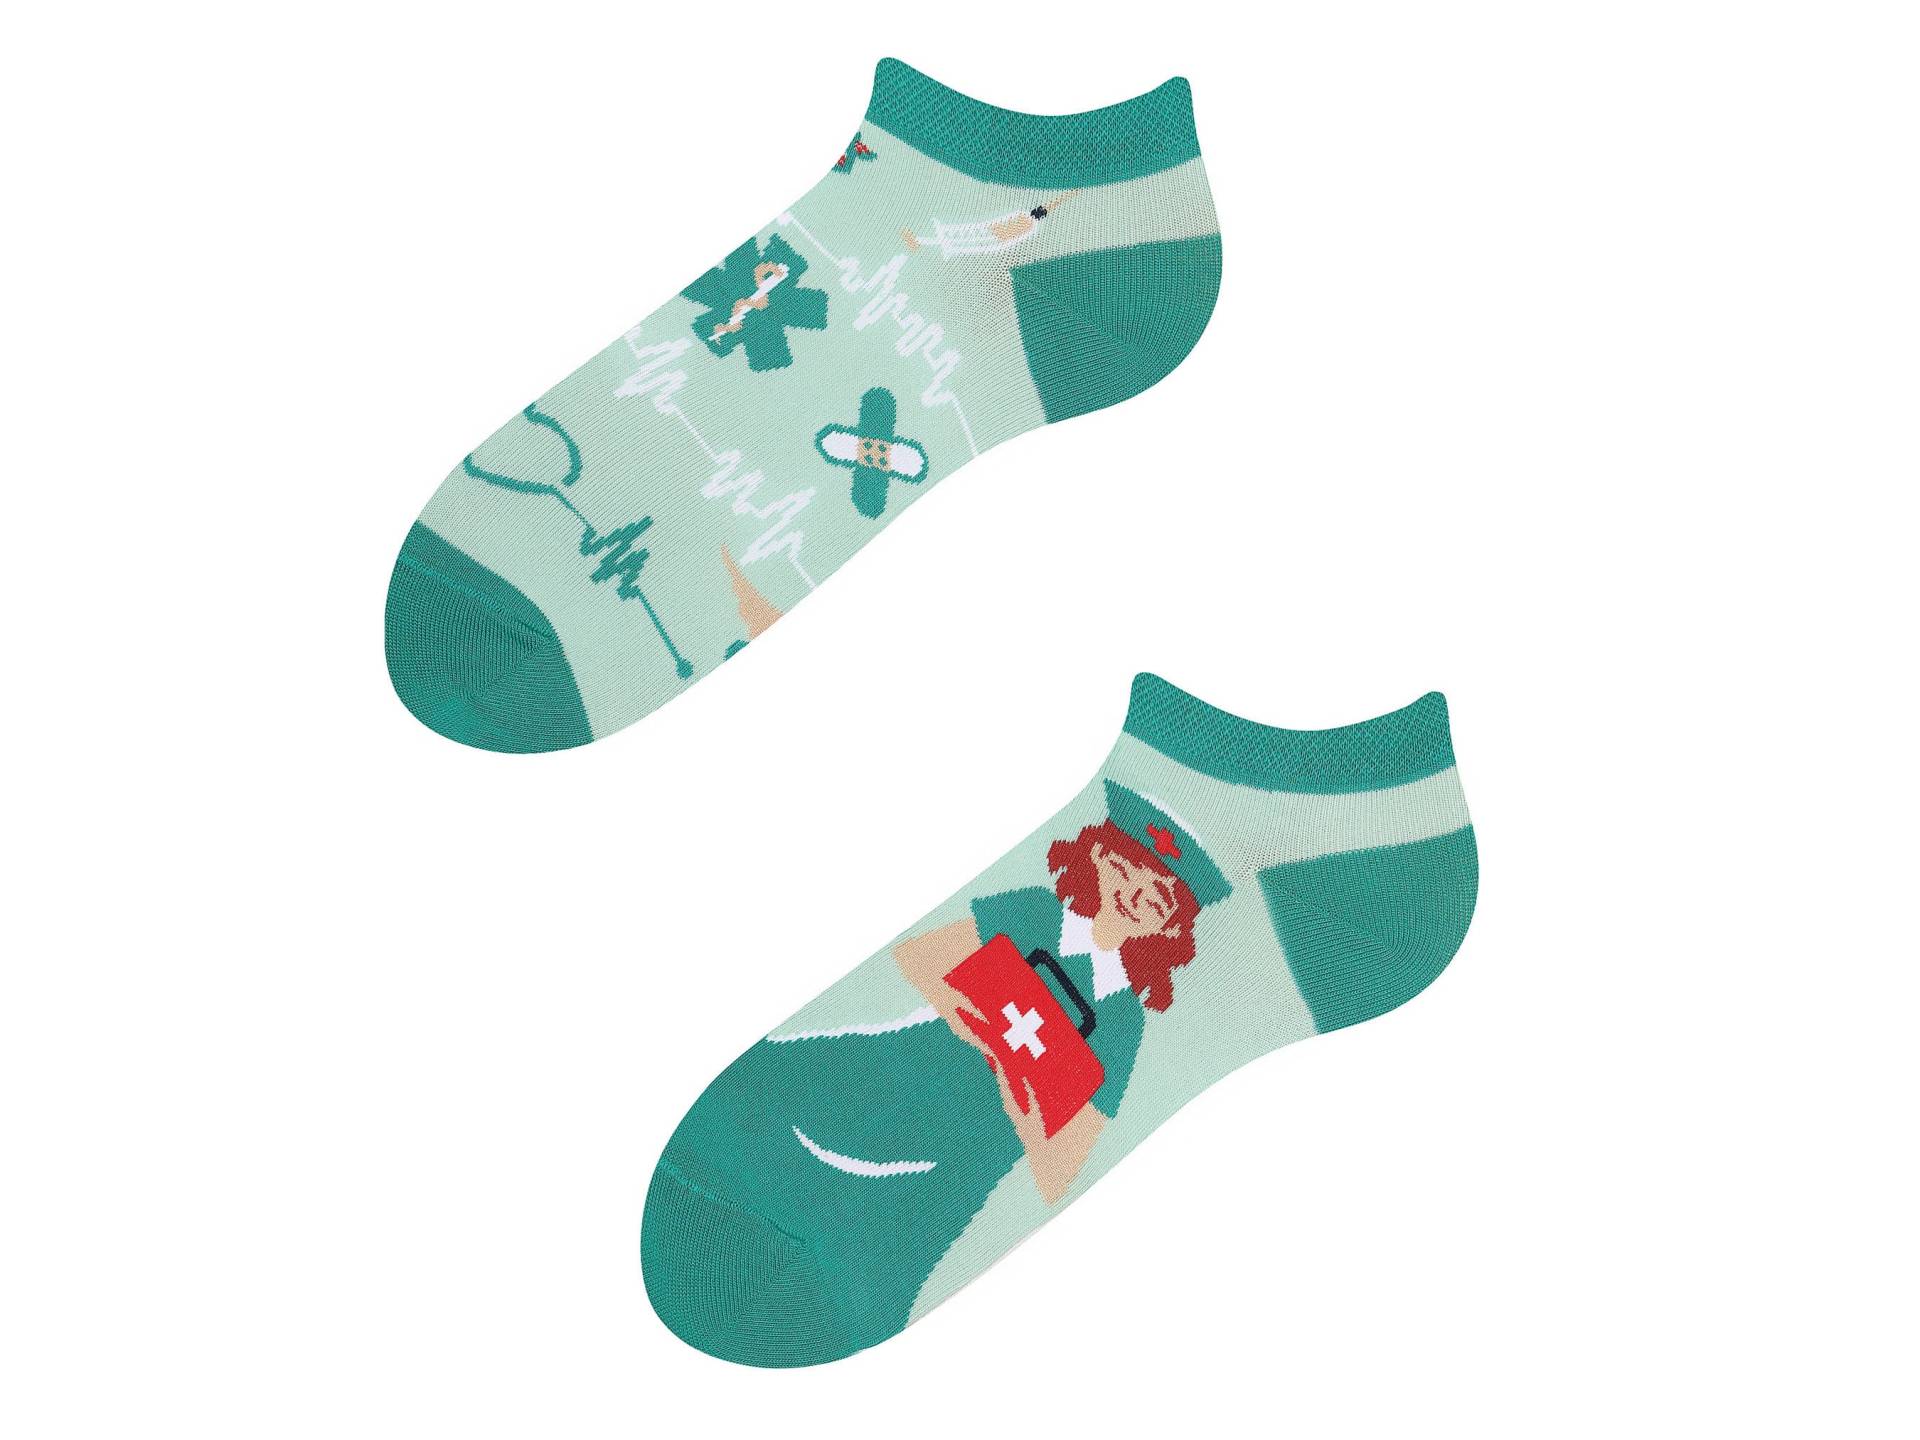 Coole Sneaker Socken Für Krankenschwester | Witziges Geschenk Krankenpflegerin Op Schwester Ärztin von TODOSOCKS